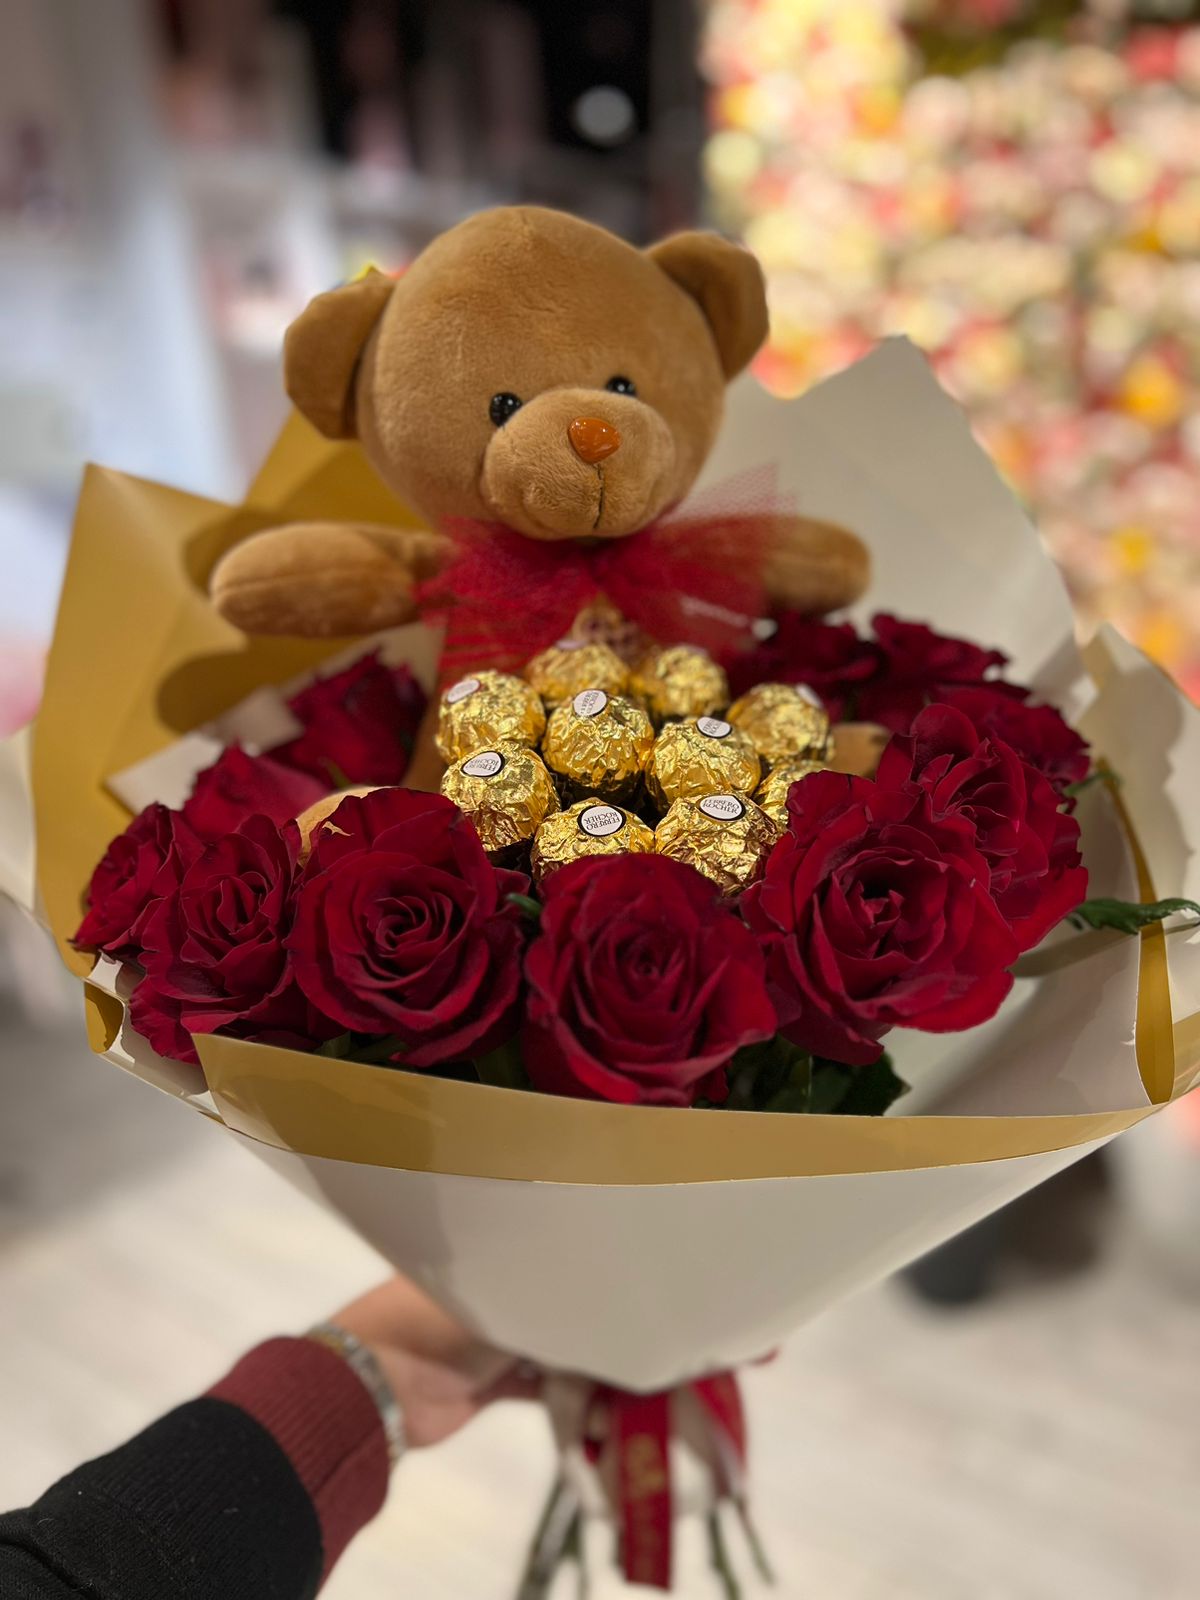 Flowers & Chocolate Bouquet with Teddy Bear